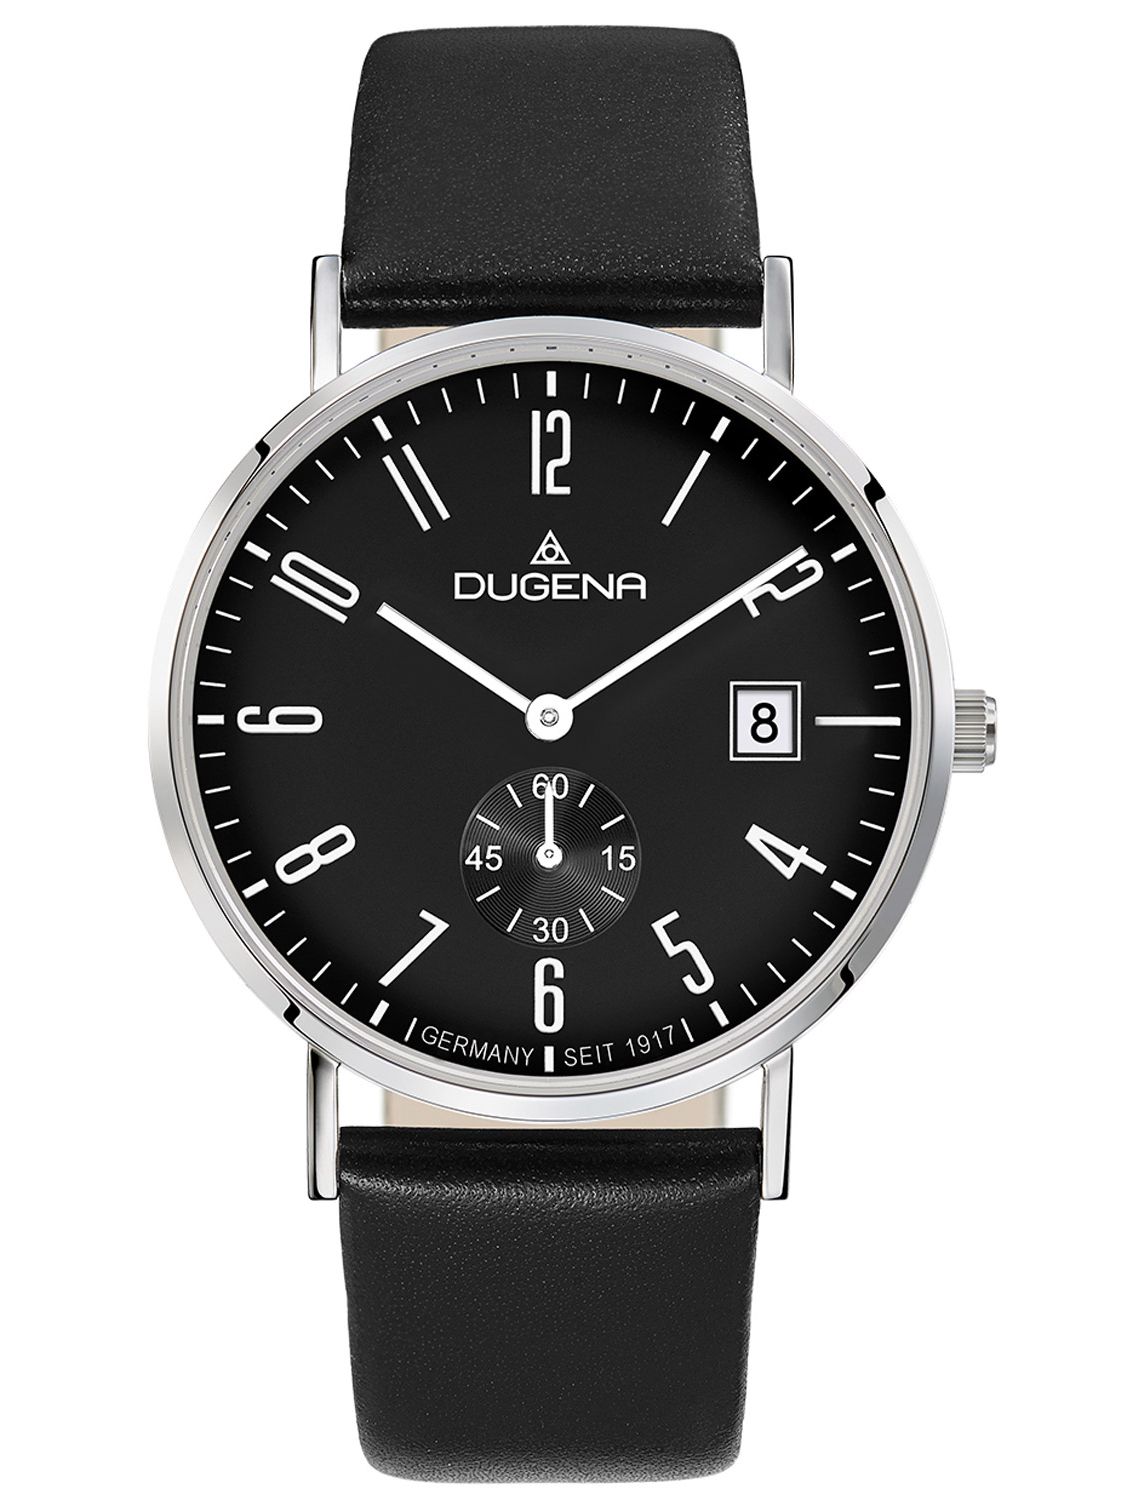 Dugena Men's Quartz Watch Mondo Black Leather Strap 4460666-1 • uhrcenter